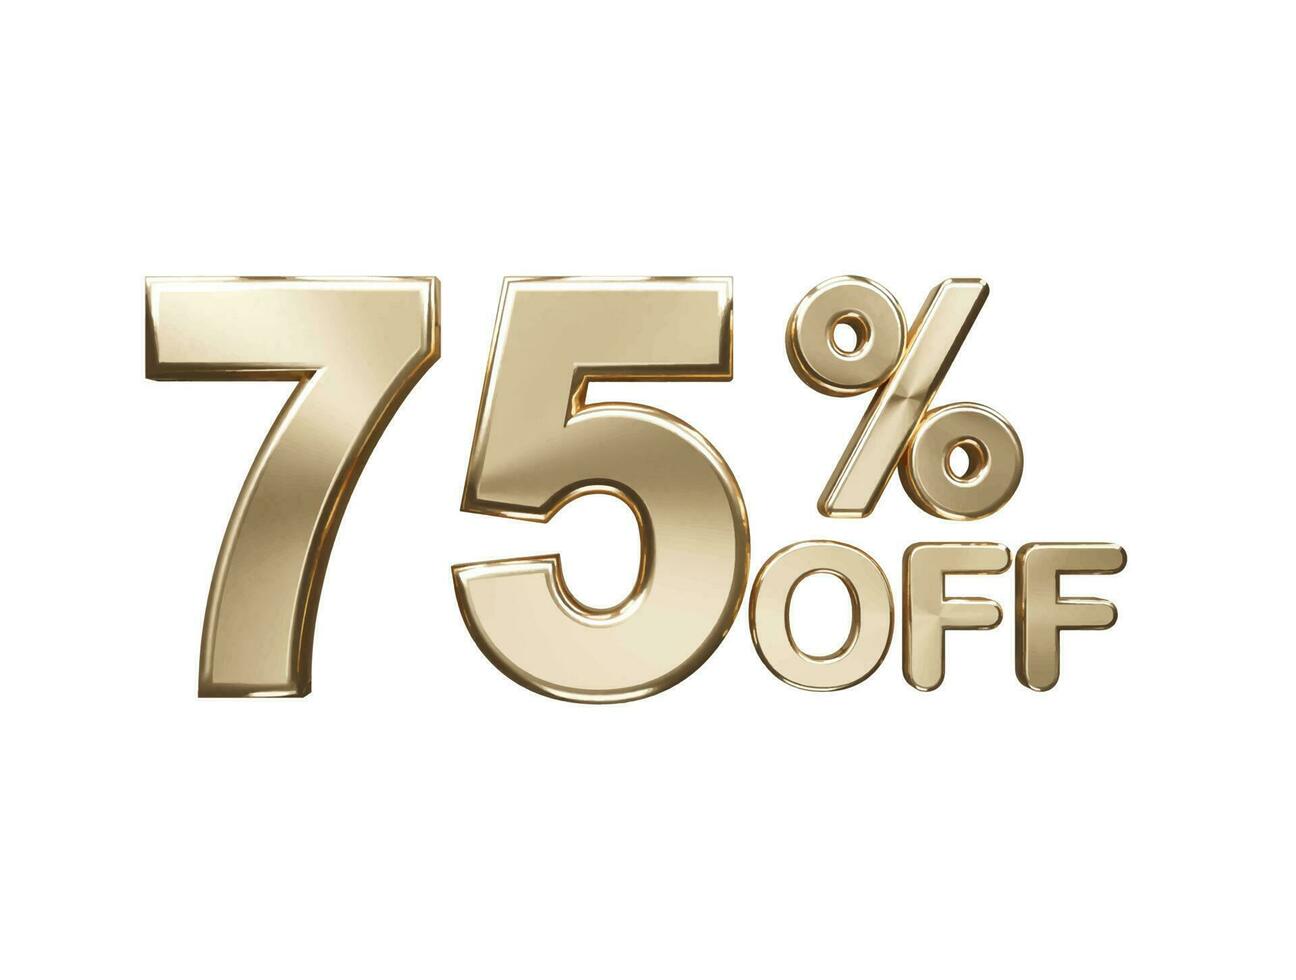 Percent off discount sale text effect vector